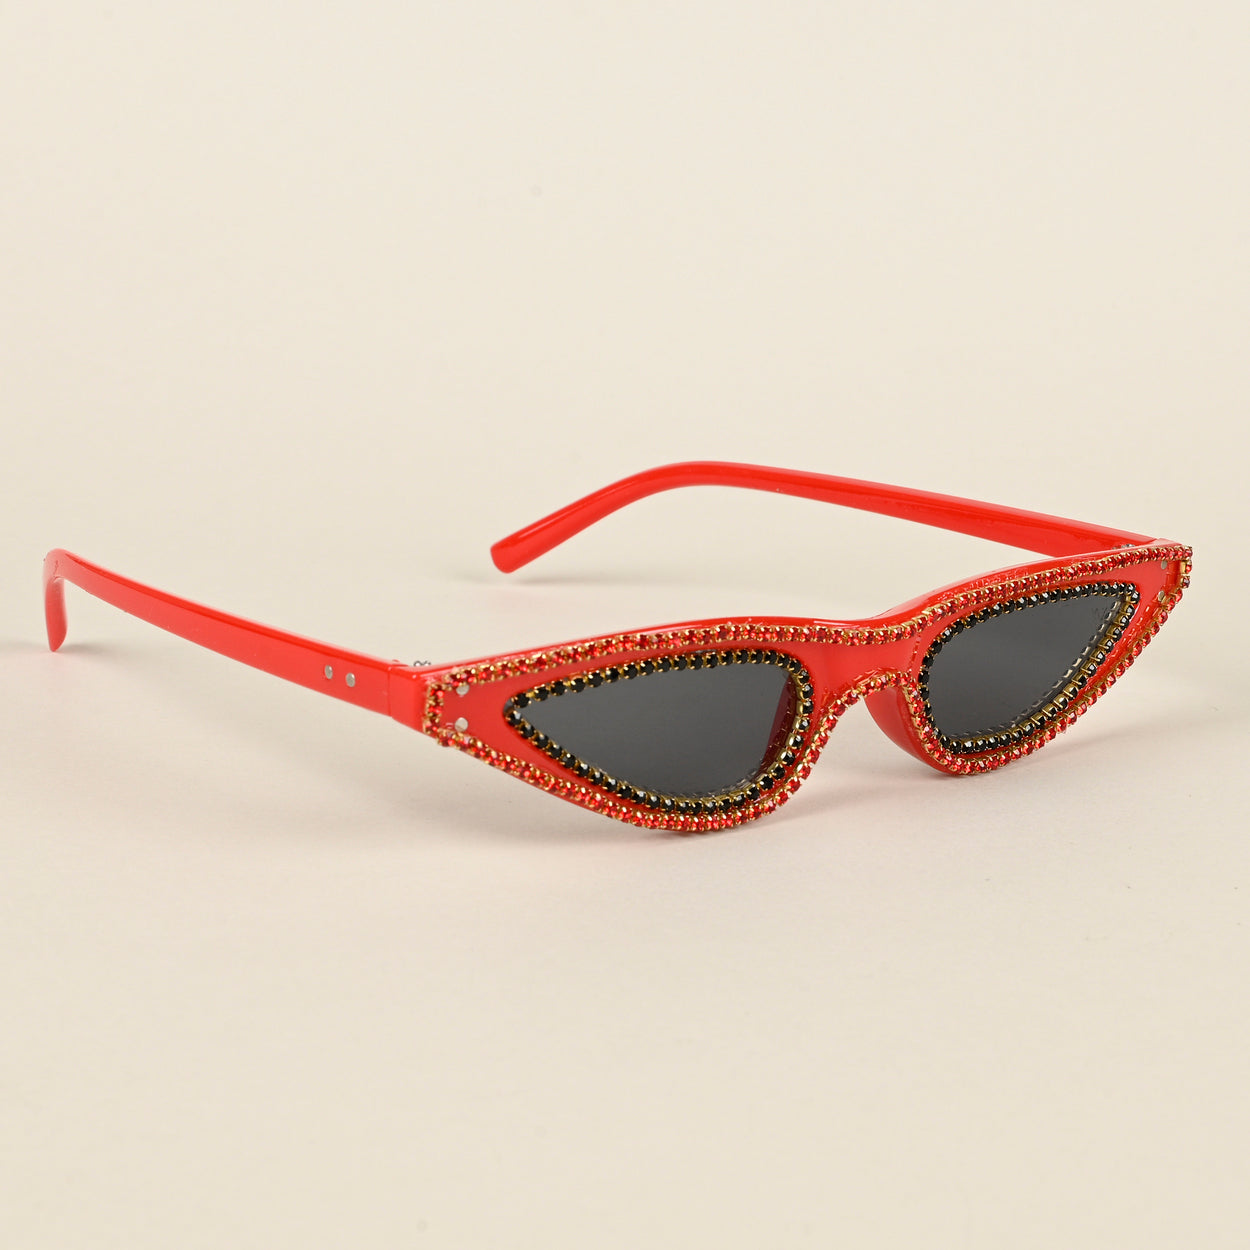 Voyage Black Cateye Sunglasses for Women - MG4369